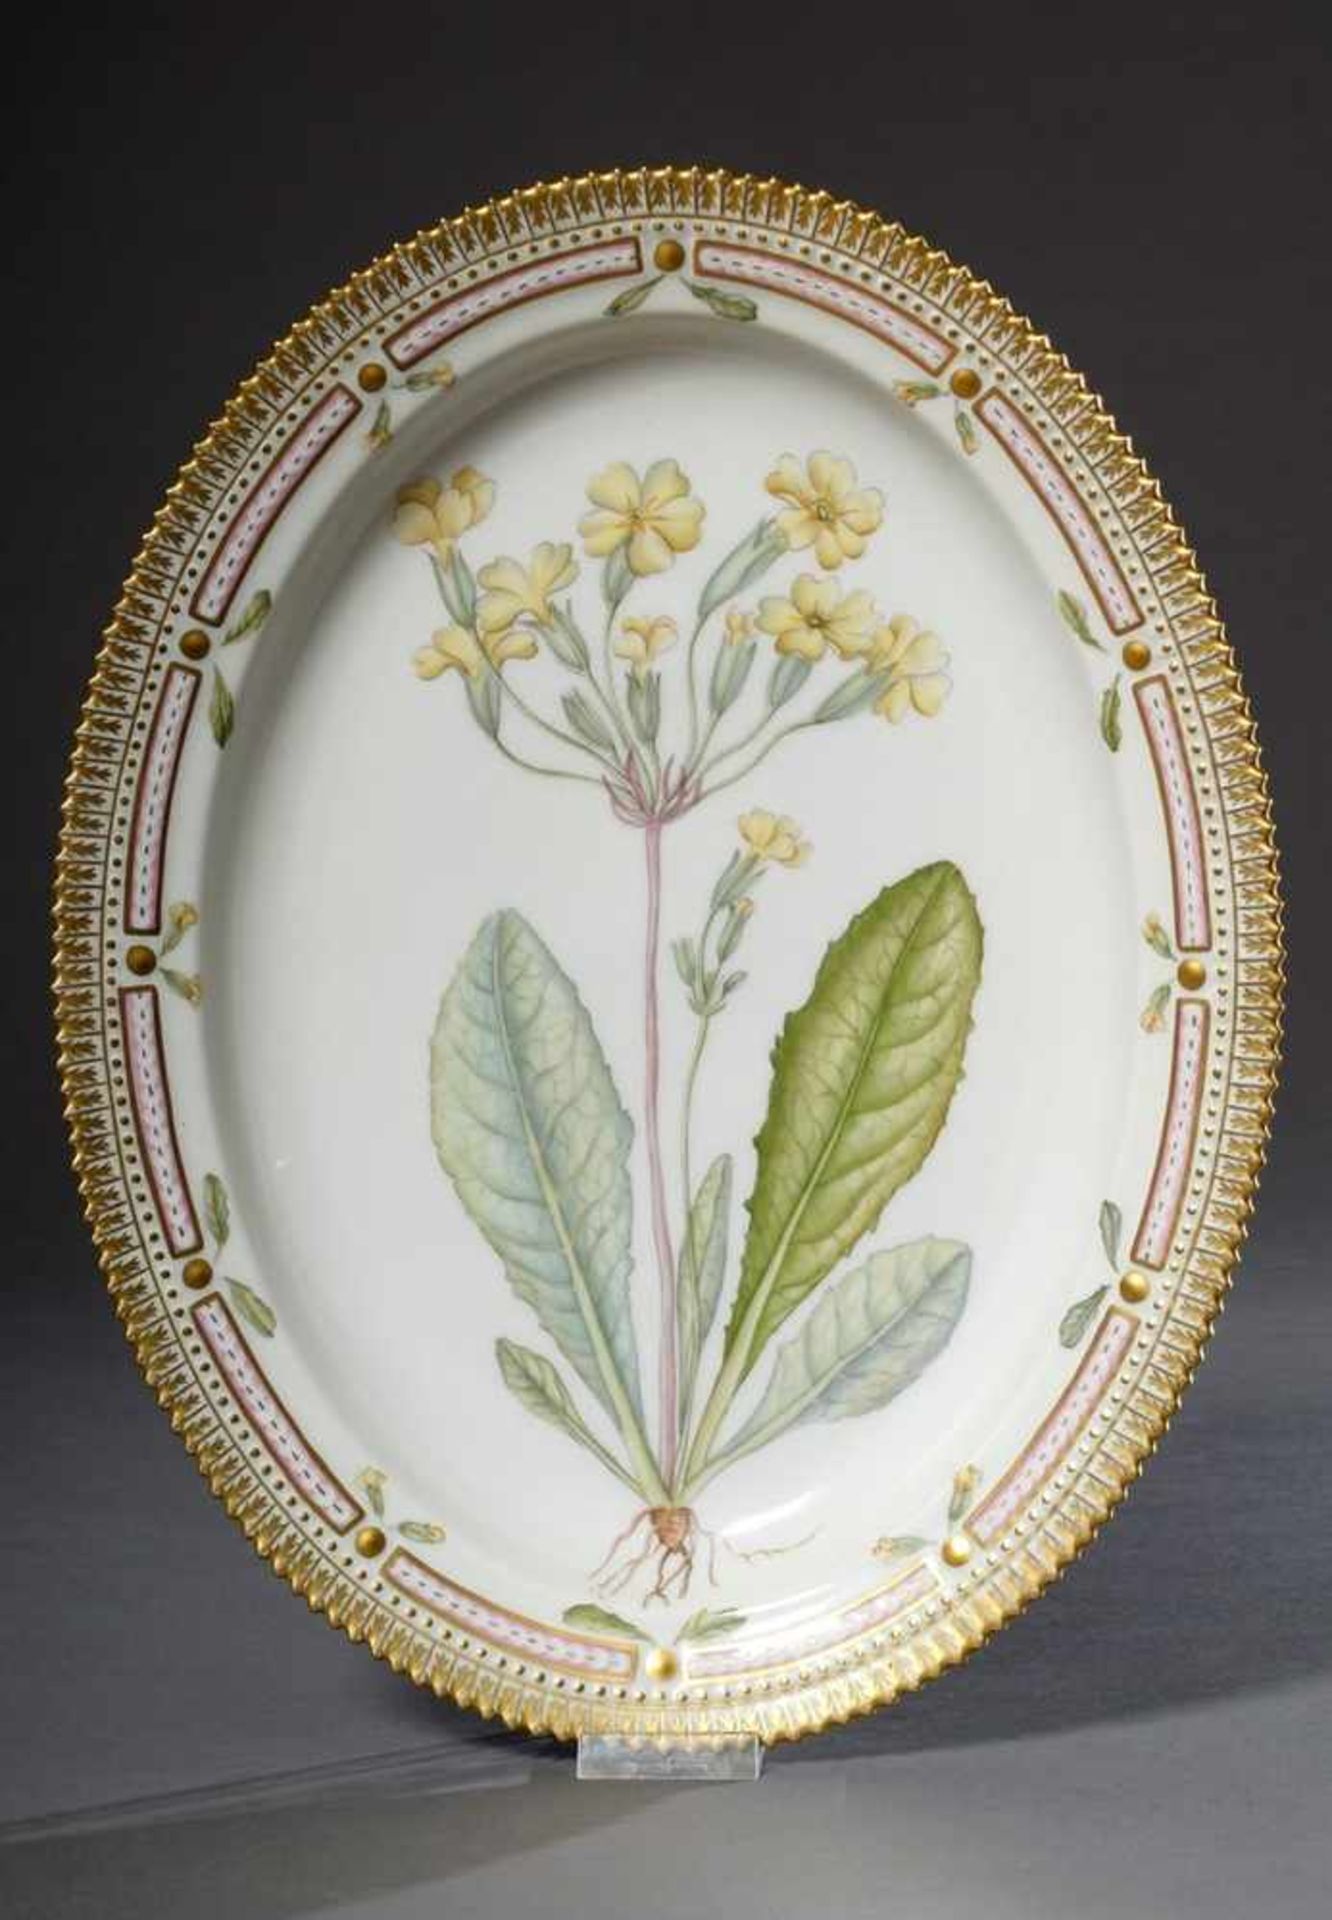 Ovale Royal Copenhagen Platte "Flora Danica - Primula variabilis Gaup", farbig bemalt mit